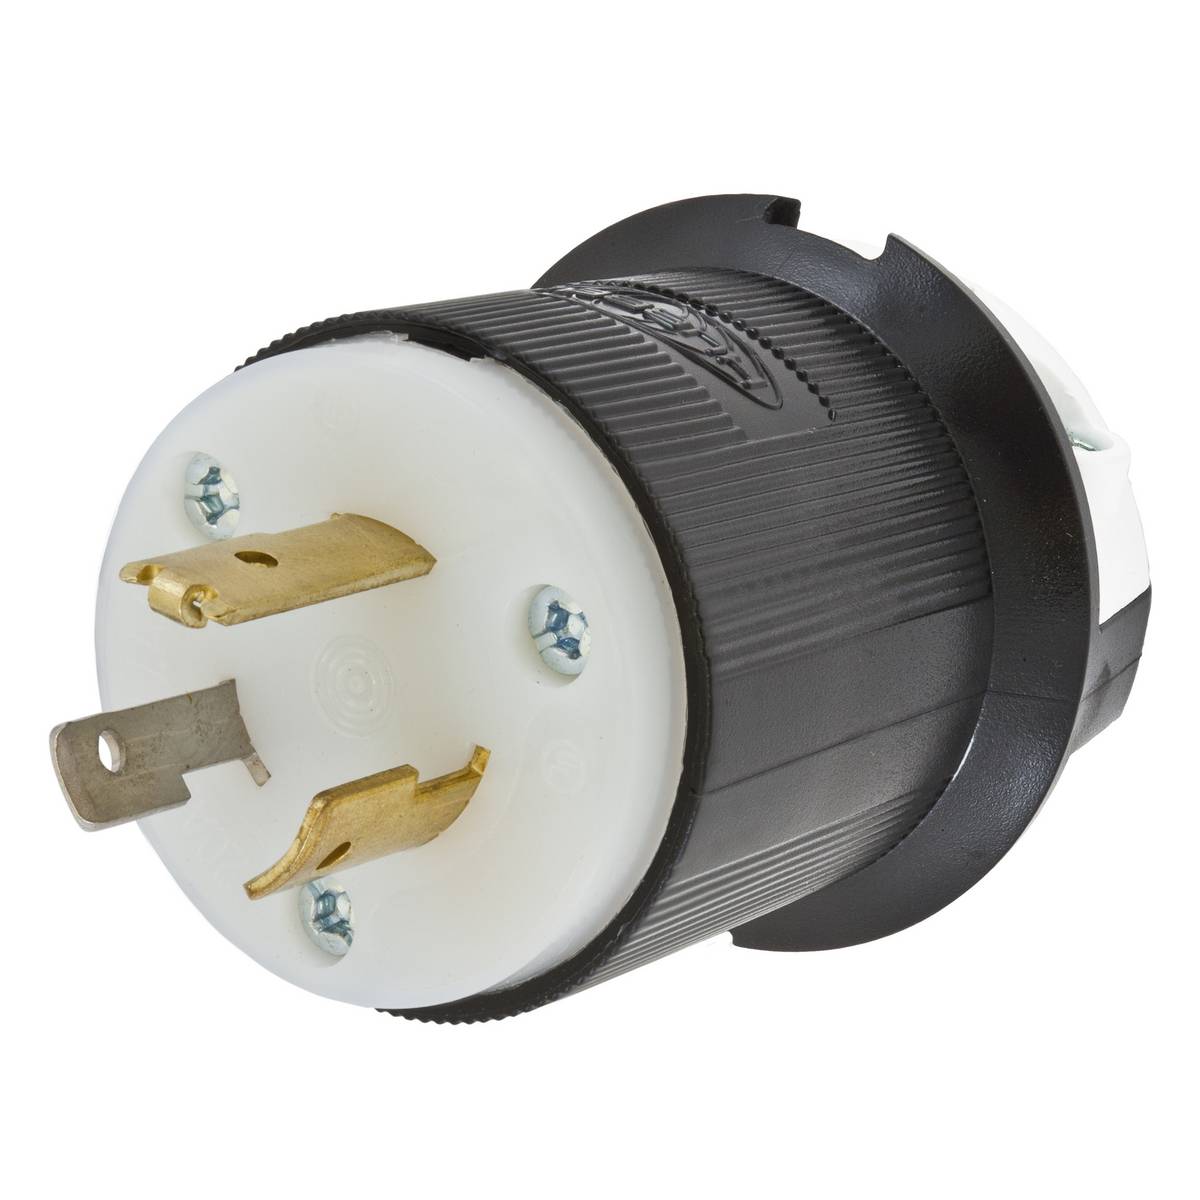 Wiring Device-Kellems Twist-Lock® Insulgrip® HBL3721 1-Phase Grounding Cord Mount Locking Plug, 347 VAC, 20 A, 2 Poles, 3 Wires, Black/White